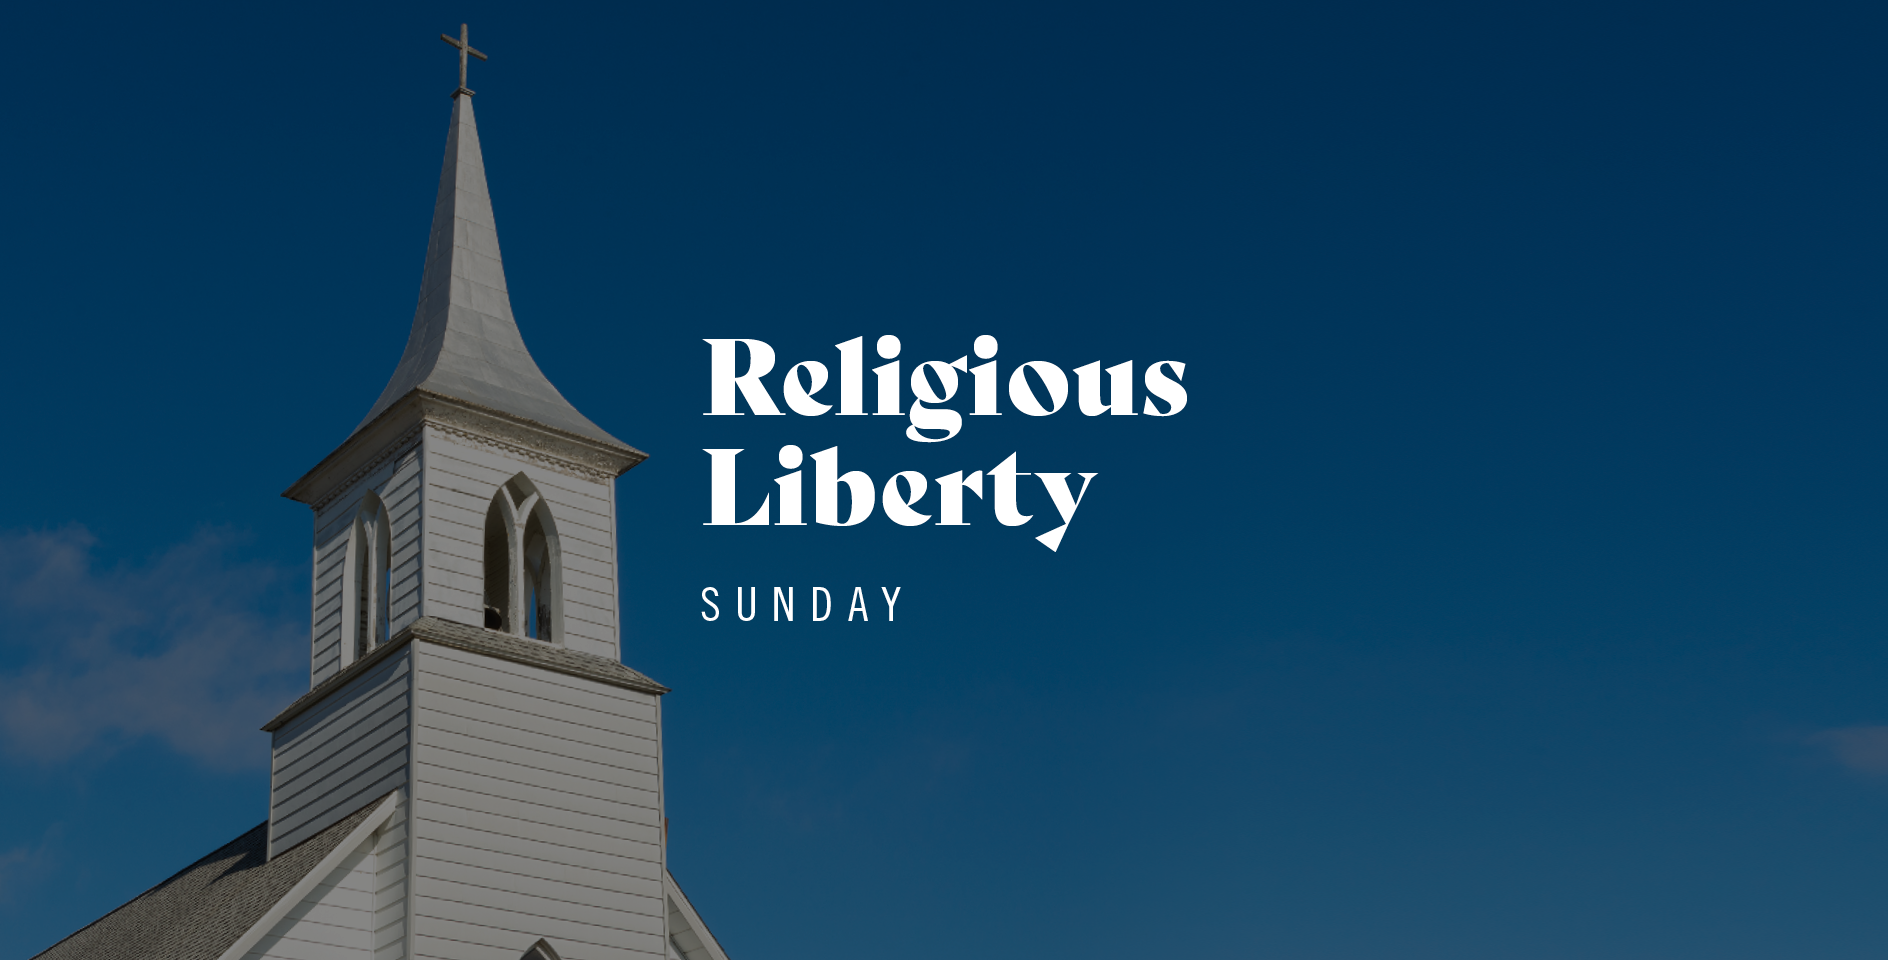 Religious Liberty Sunday